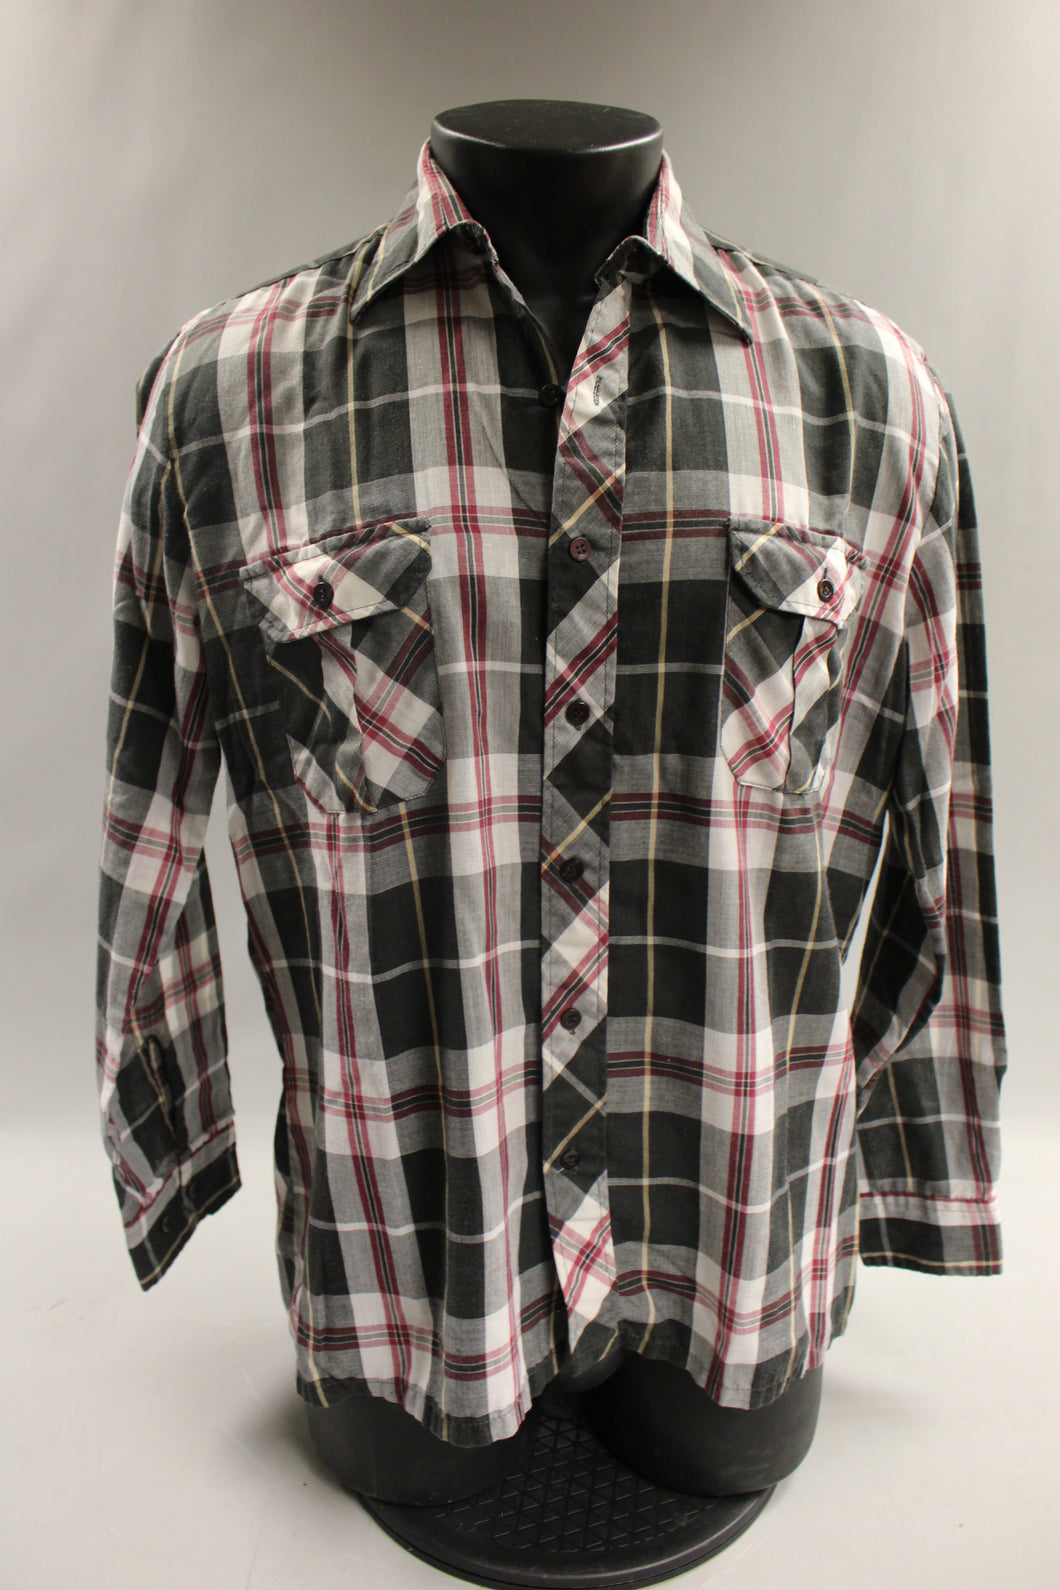 Jonathan Hill Men's Long Sleeve Plaid Shirt - Size: Large - Used